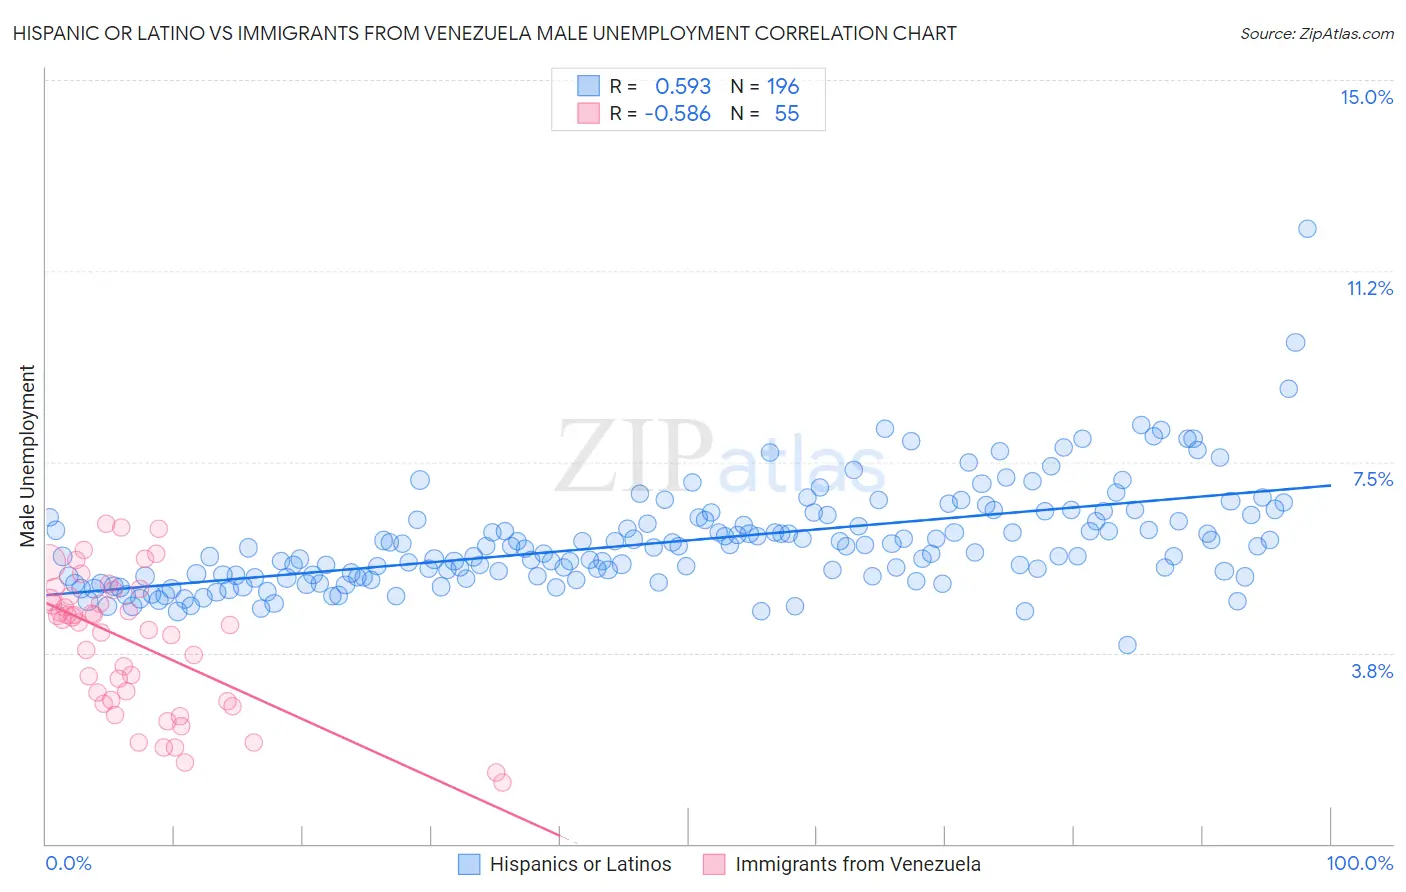 Hispanic or Latino vs Immigrants from Venezuela Male Unemployment